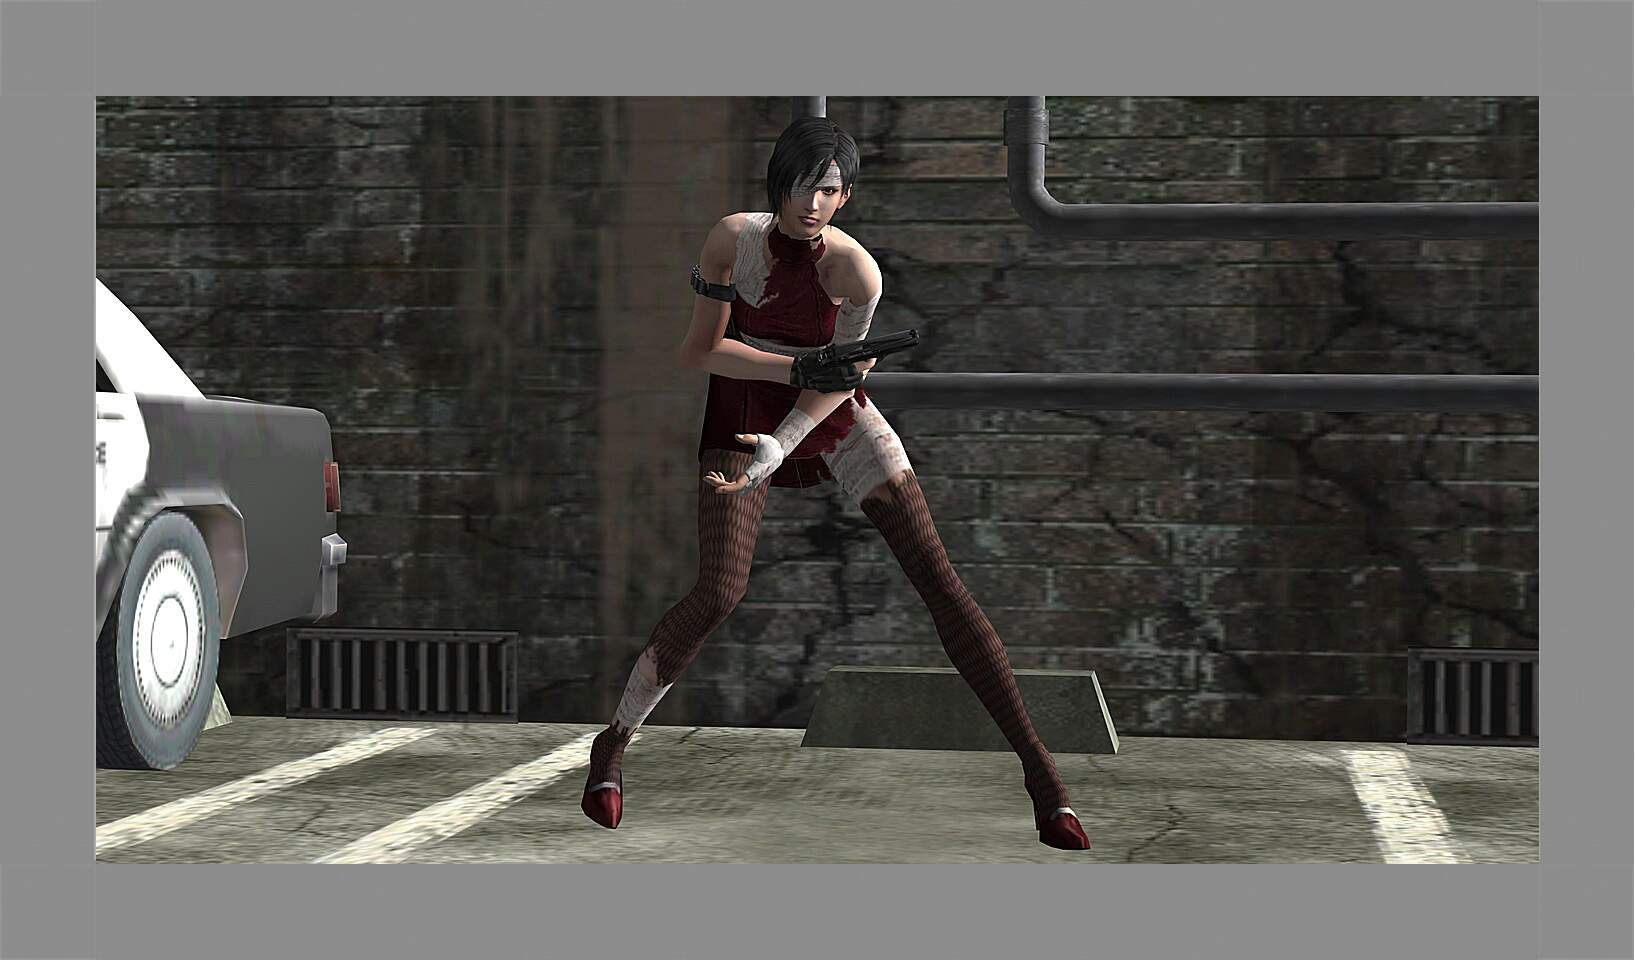 Картина в раме - Resident Evil